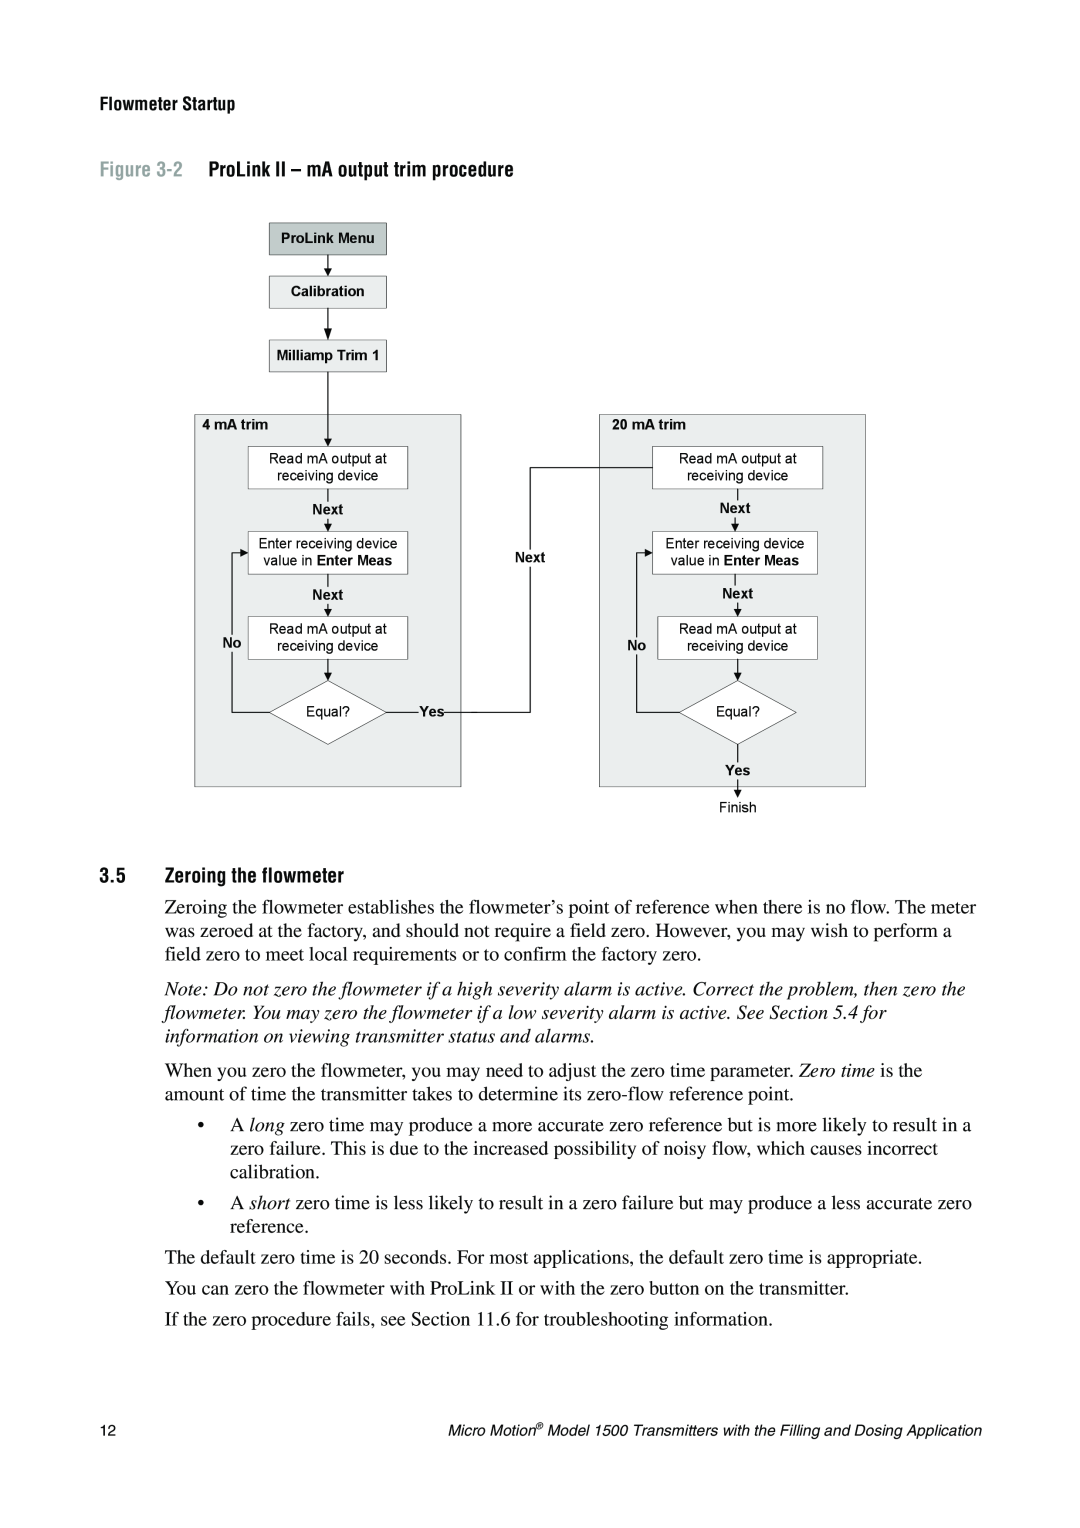 Emerson Process Management 1500 manual 2 ProLink II – mA output trim procedure, 3.5Zeroing the flowmeter 